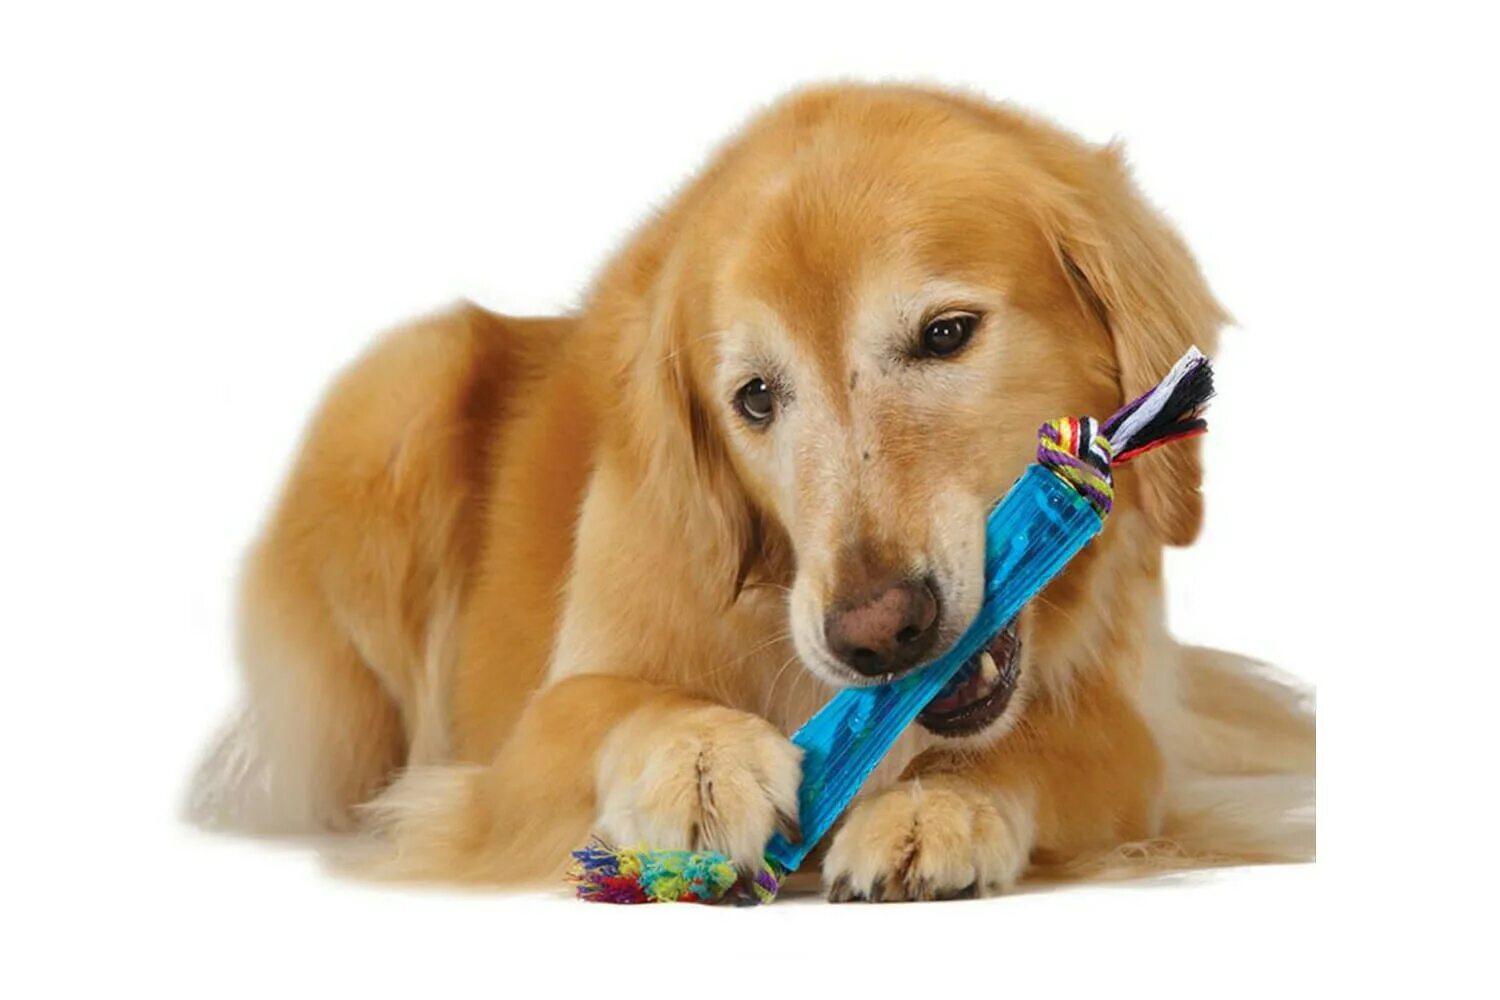 PETSTAGES PETSTAGES. Игрушки PETSTAGES для крупных собак. Собака с игрушкой в зубах. Палочка для собак PETSTAGES.